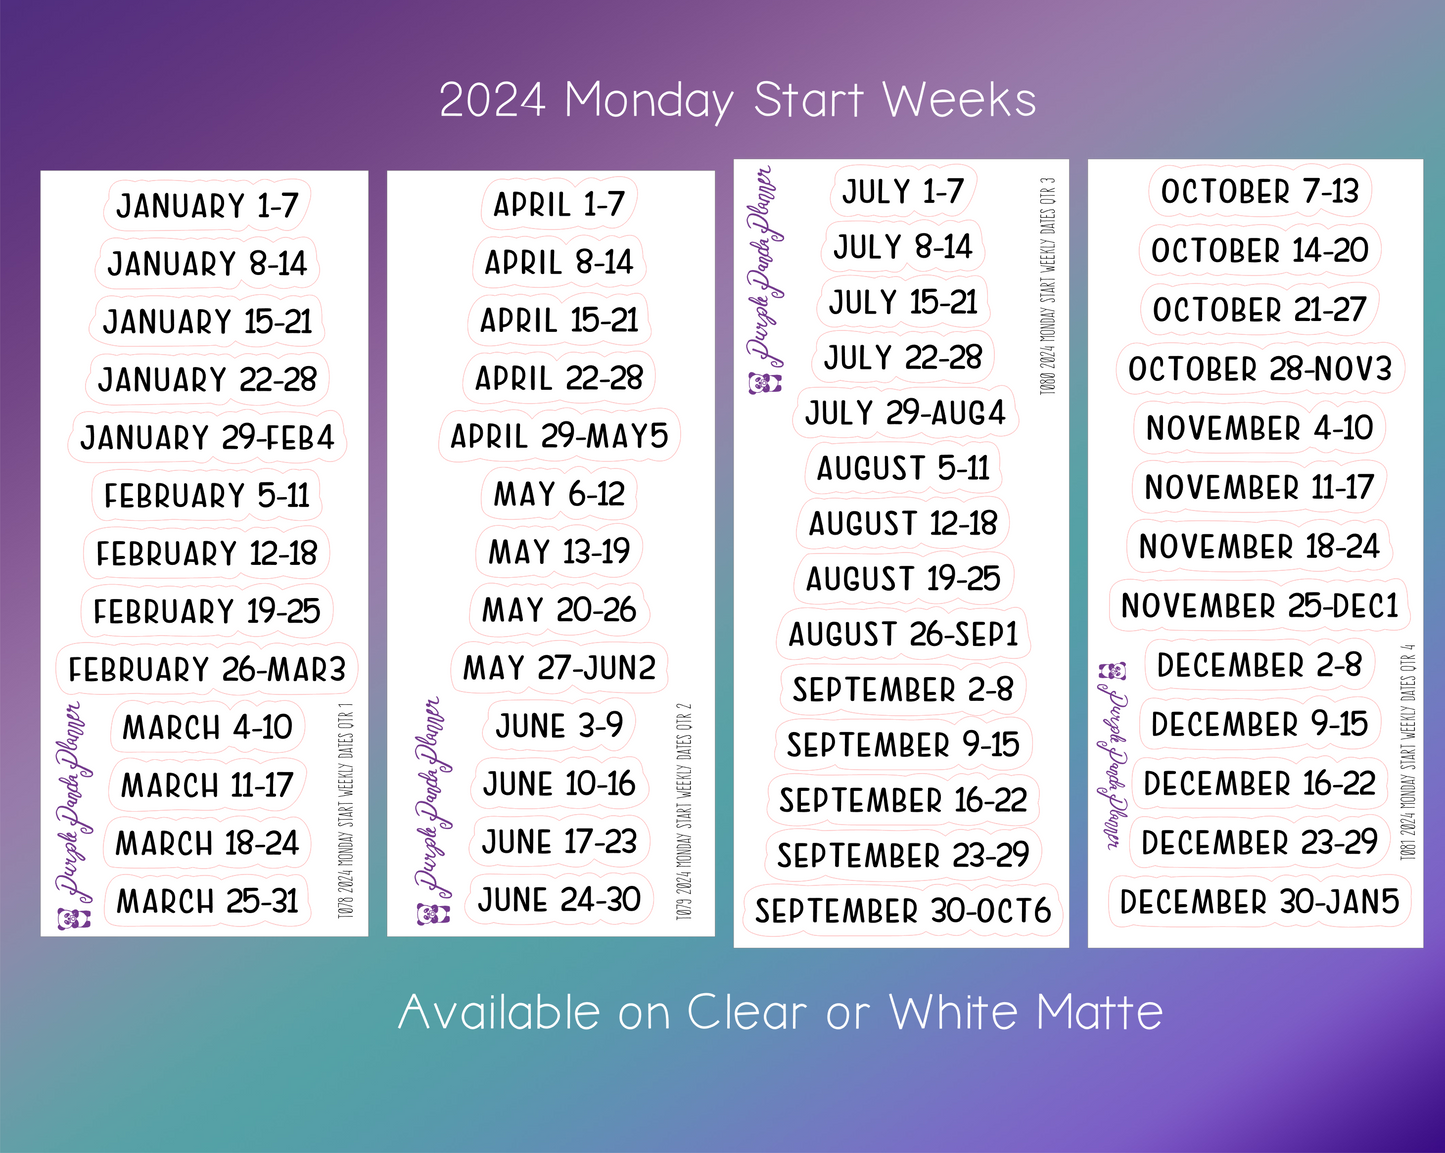 2024 Weekly Dates Monday Start